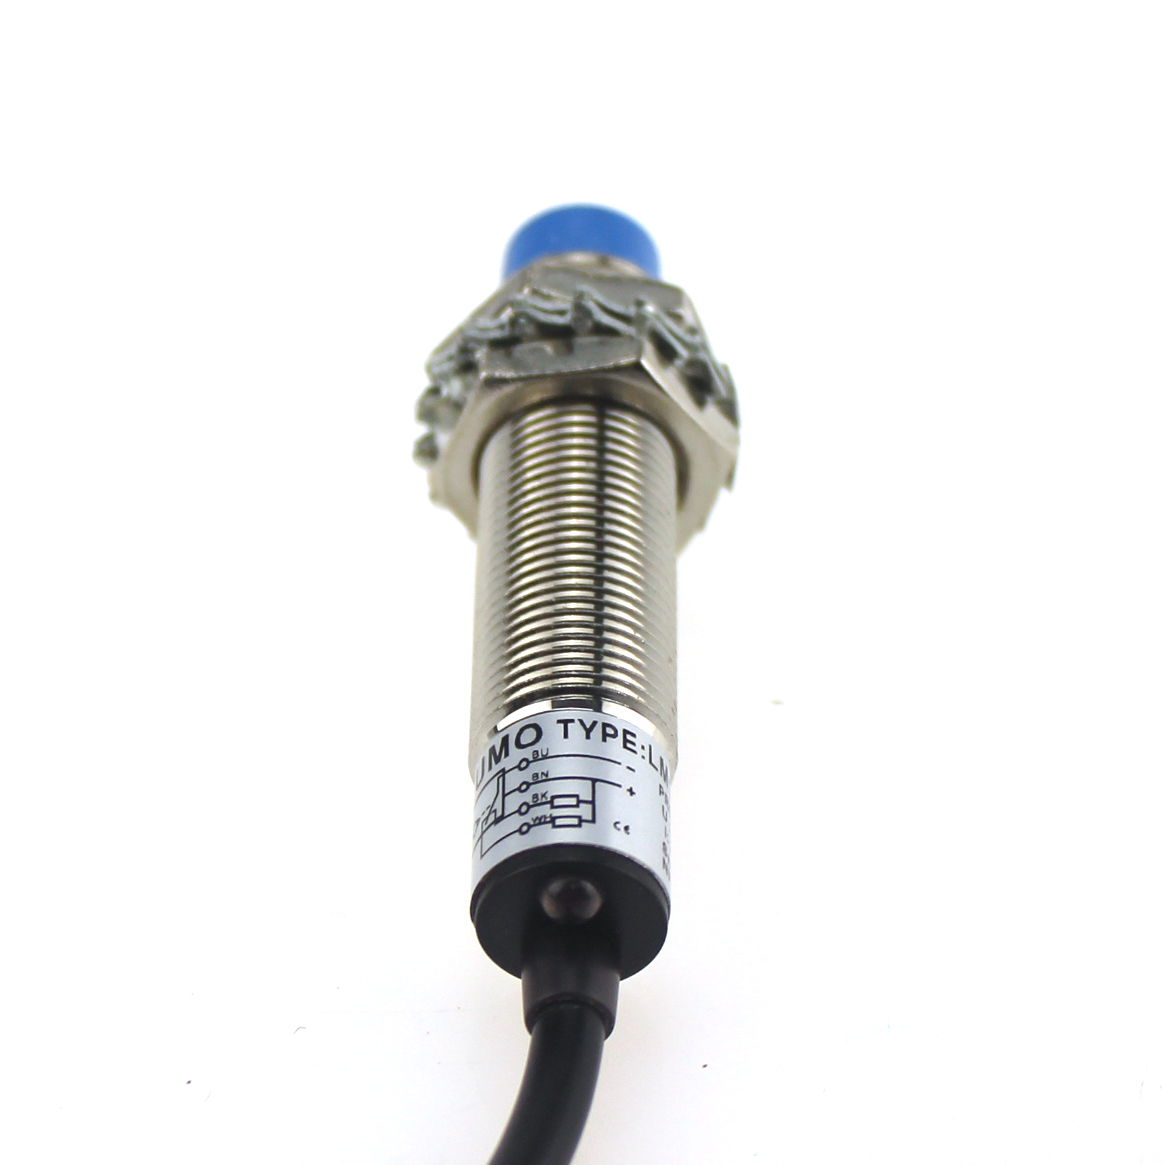 Cylindrical Metal NPN Inductive Proximity Sensor LM12-3004NC 